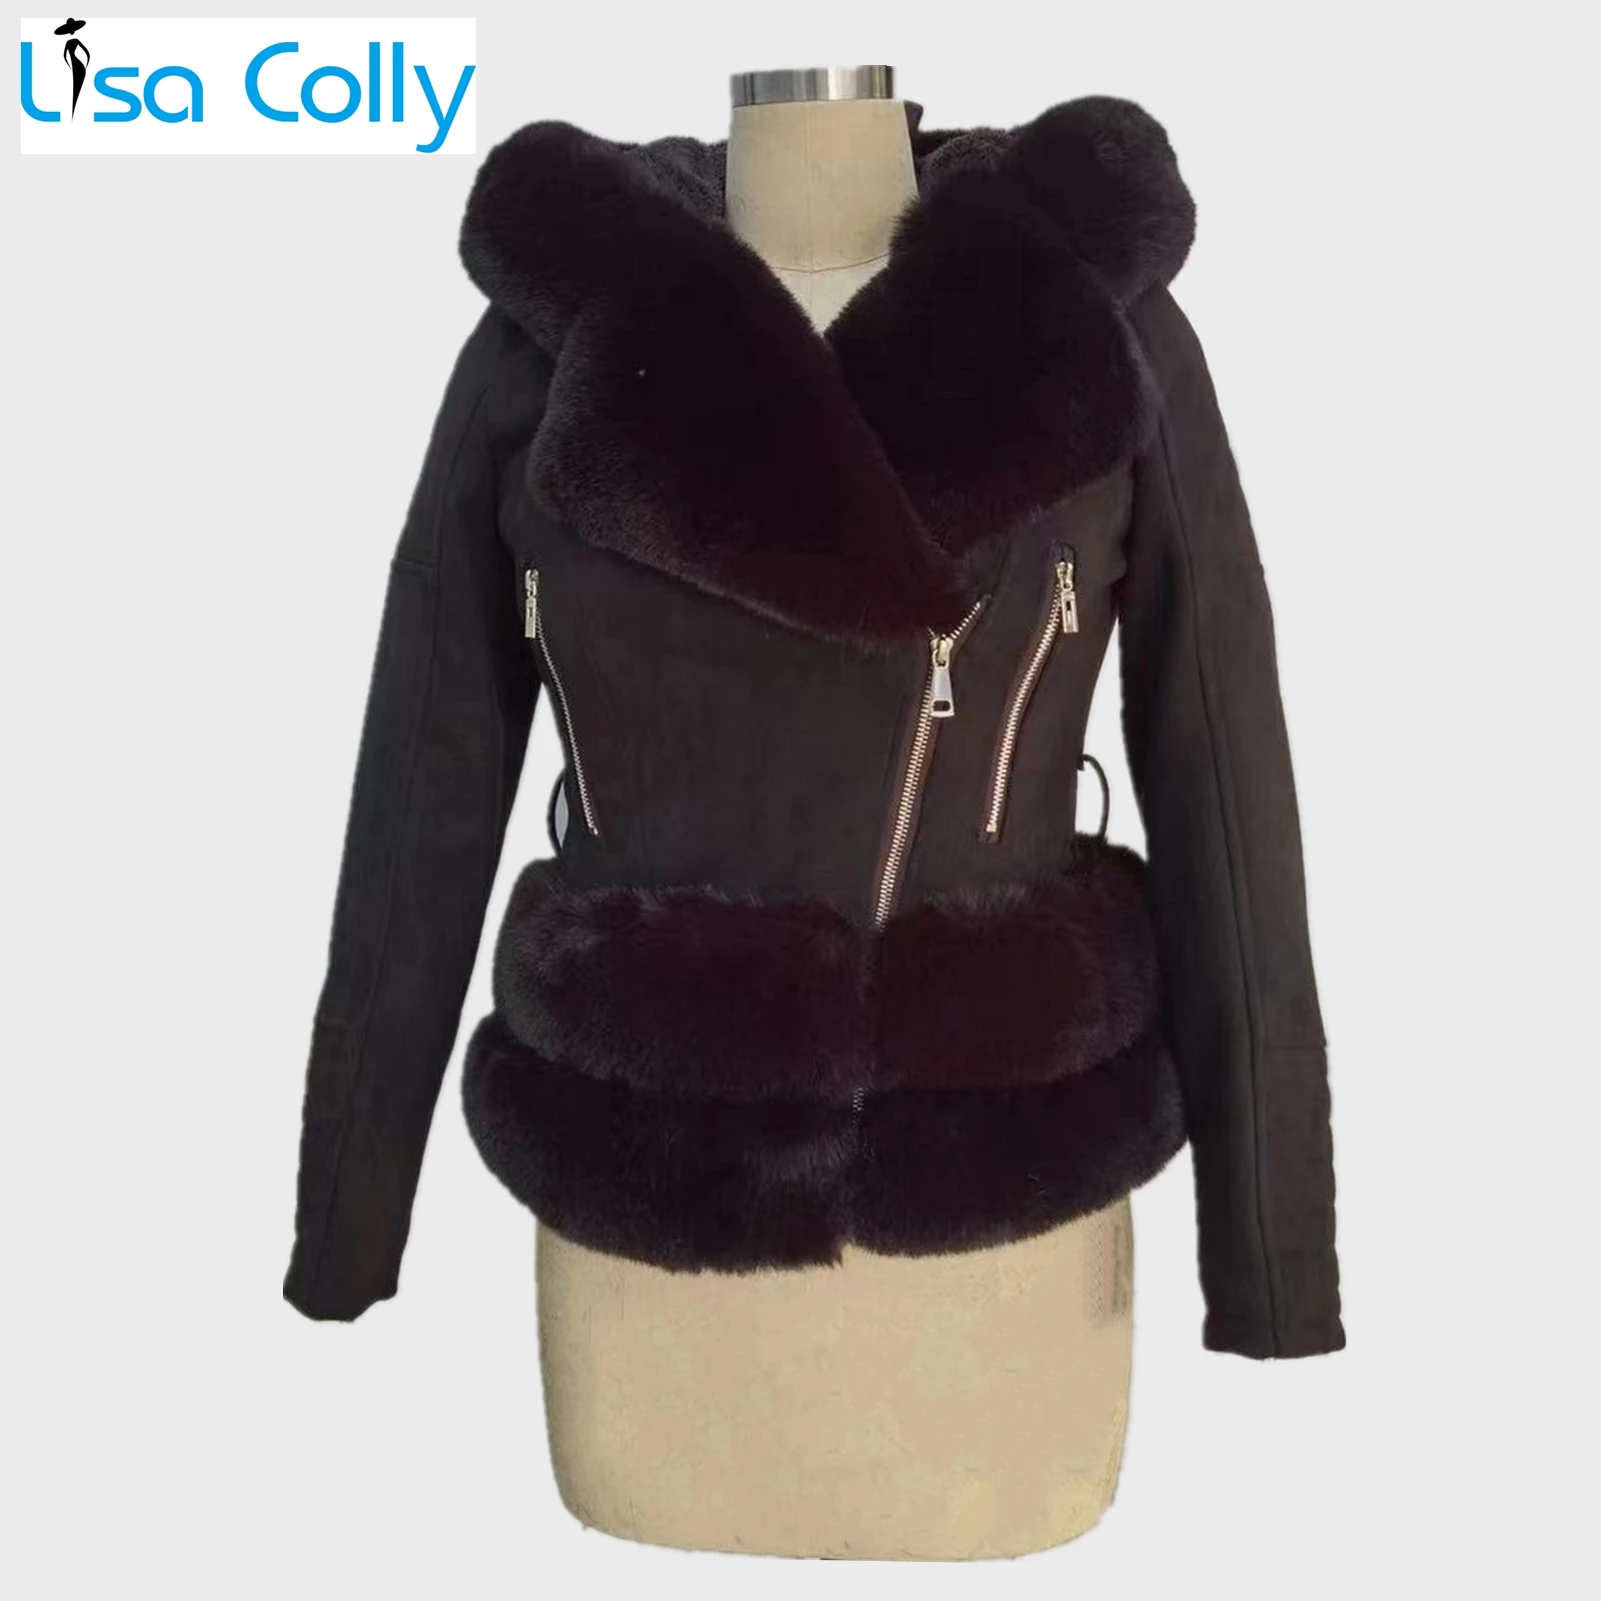 Women Winter Fashion Thick Soft Zipper Short Faux Rabbit Fur Coat Jacket Warm Faux Fur Parka Coat Outwear With Hooded Belt